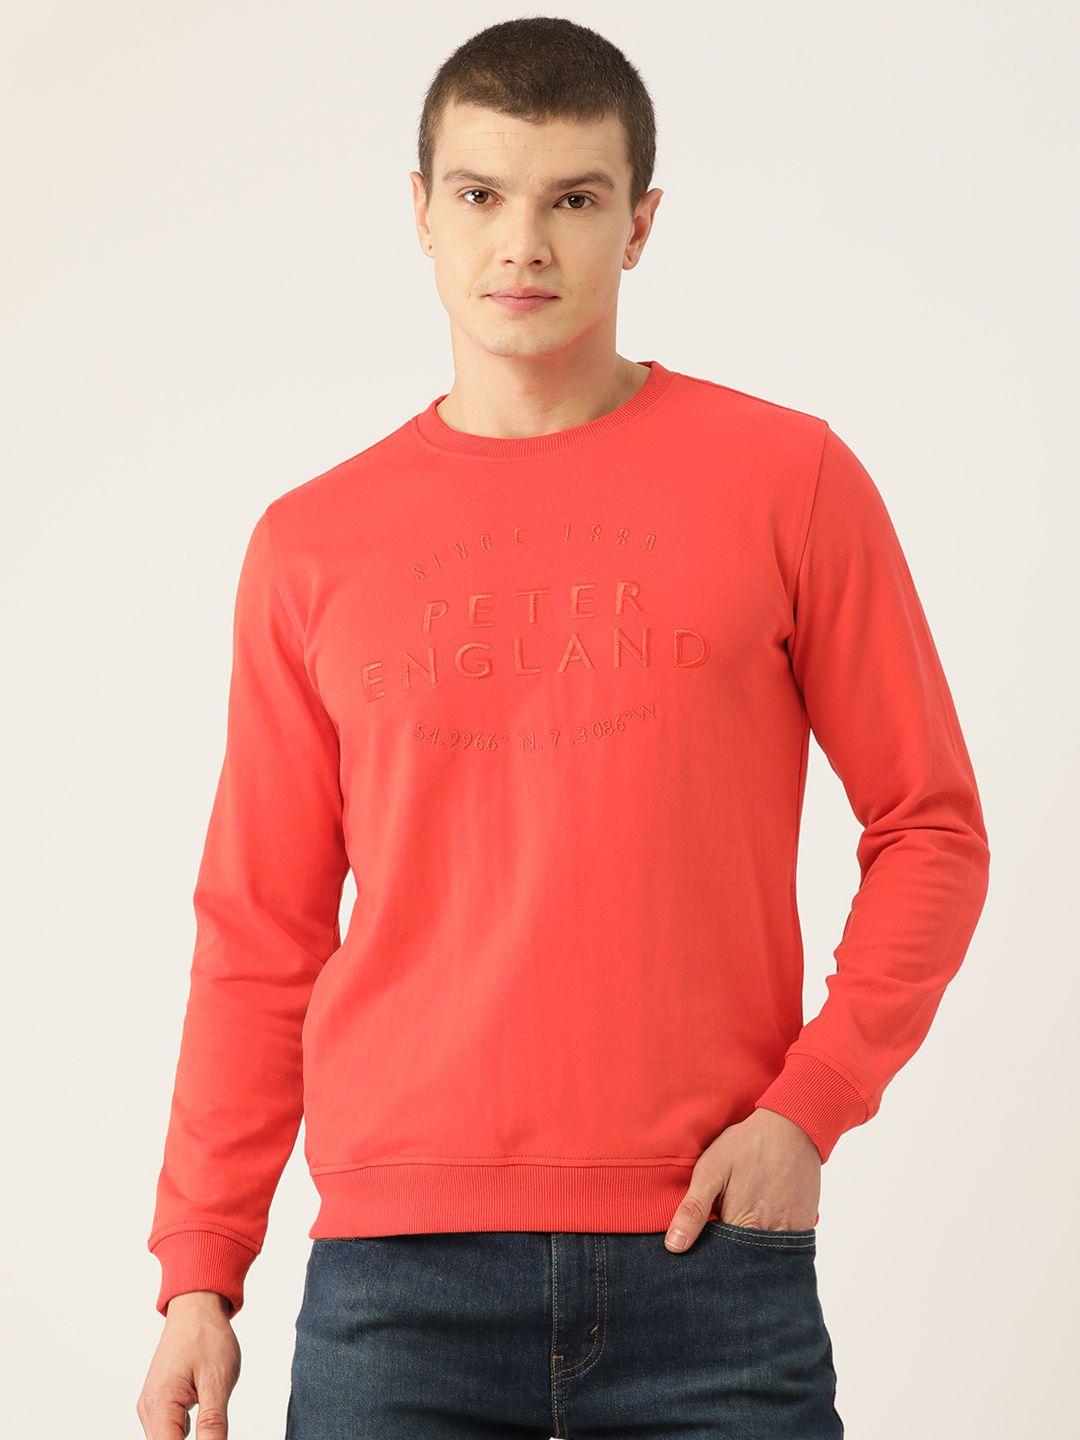 peter england brand logo embroidered pullover sweatshirt